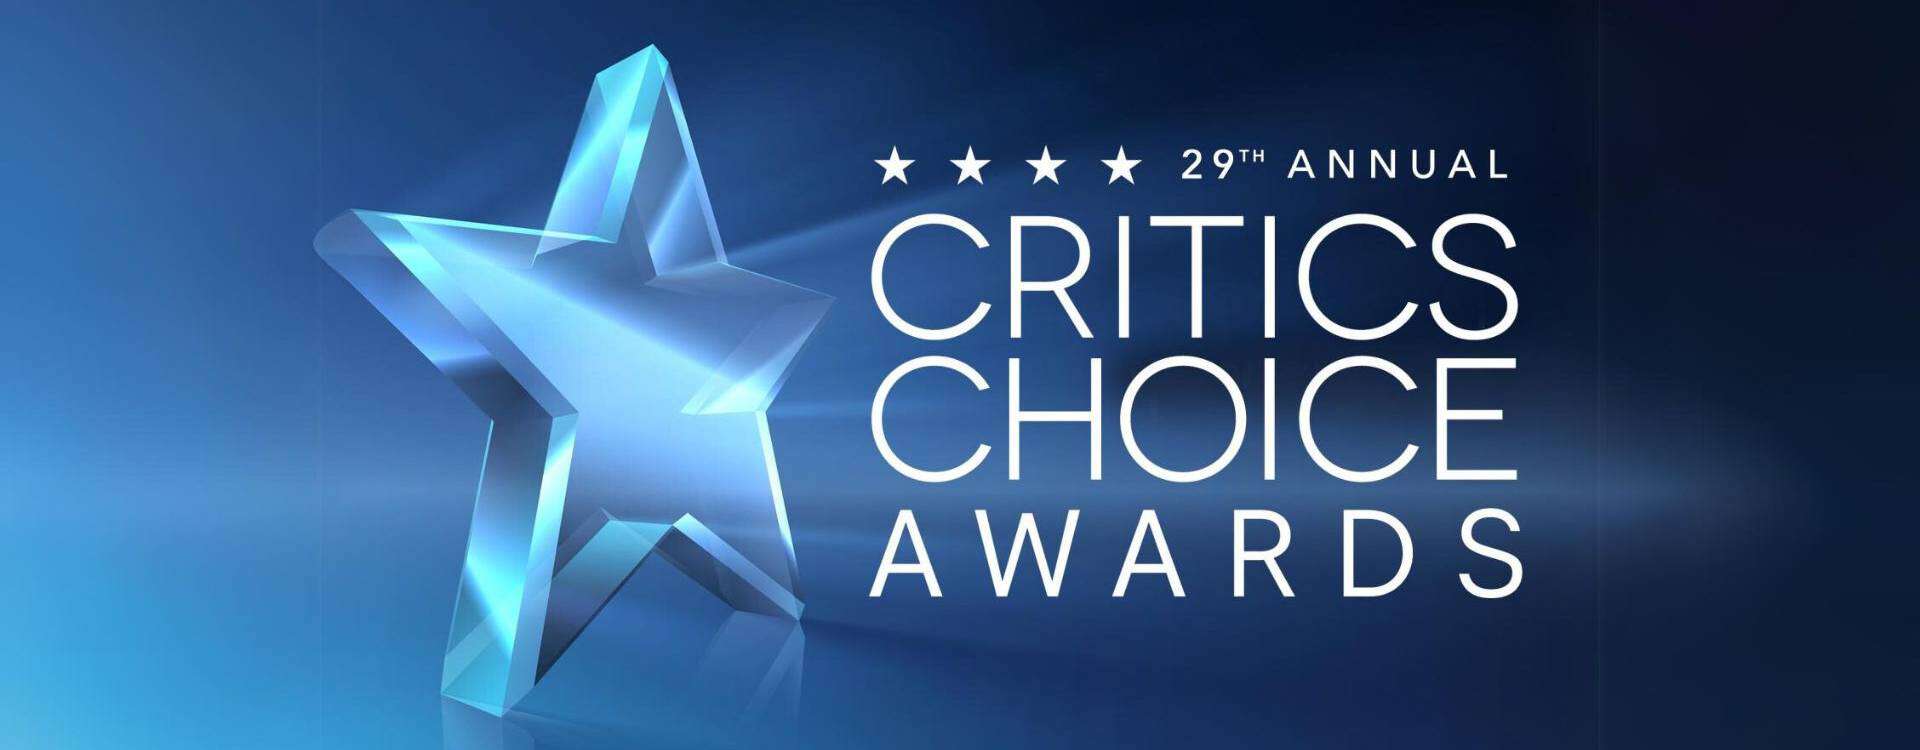 The 29th annual Critics’ Choice Awards logo from the American-Canadian Critics’ Choice Association.